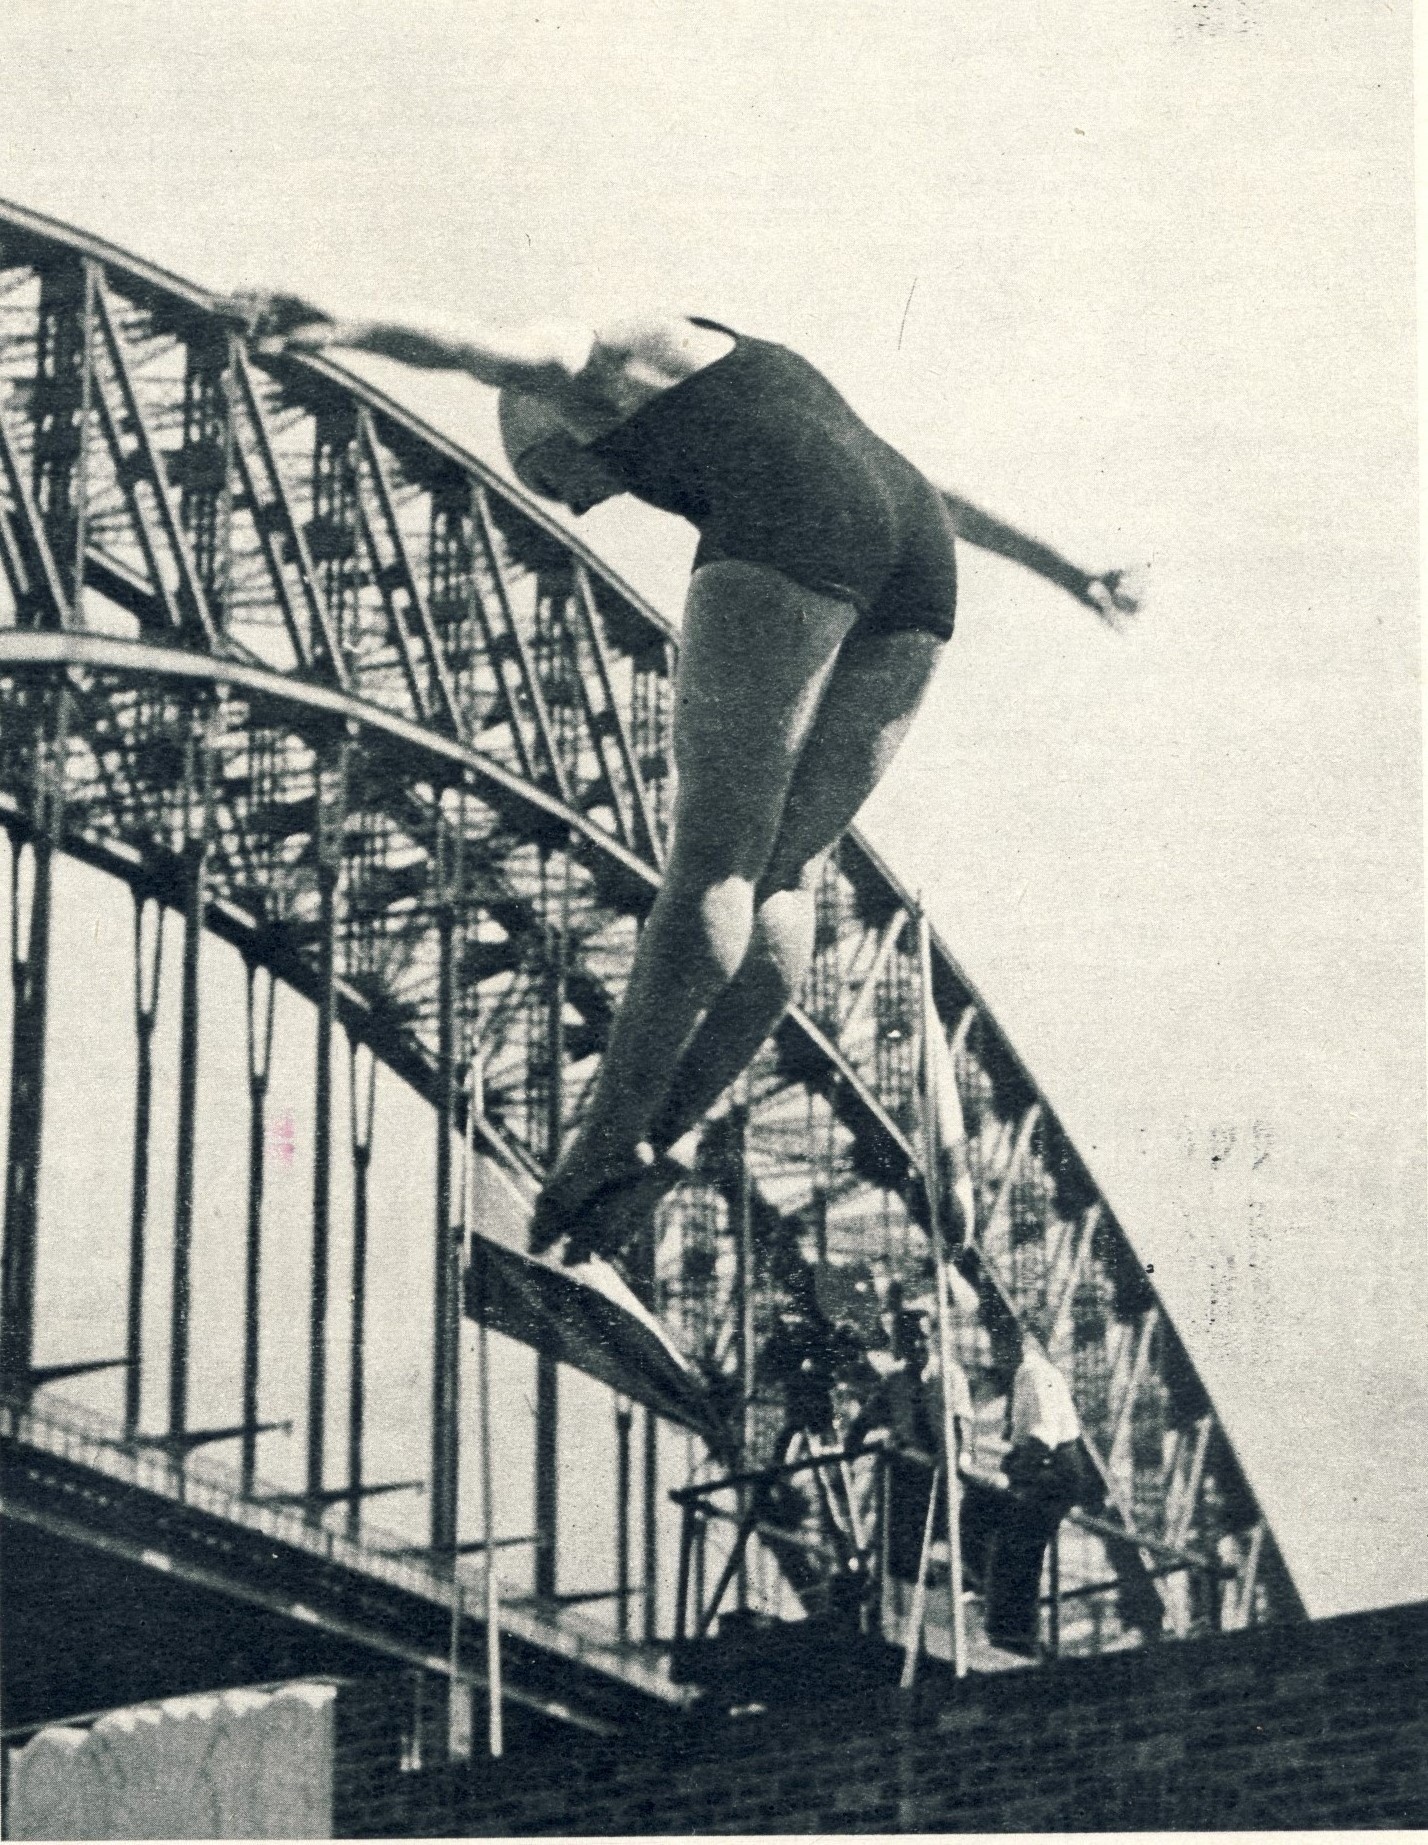 Diving at Sydney 1938 took place under the Harbour Bridge ©Philip Barker